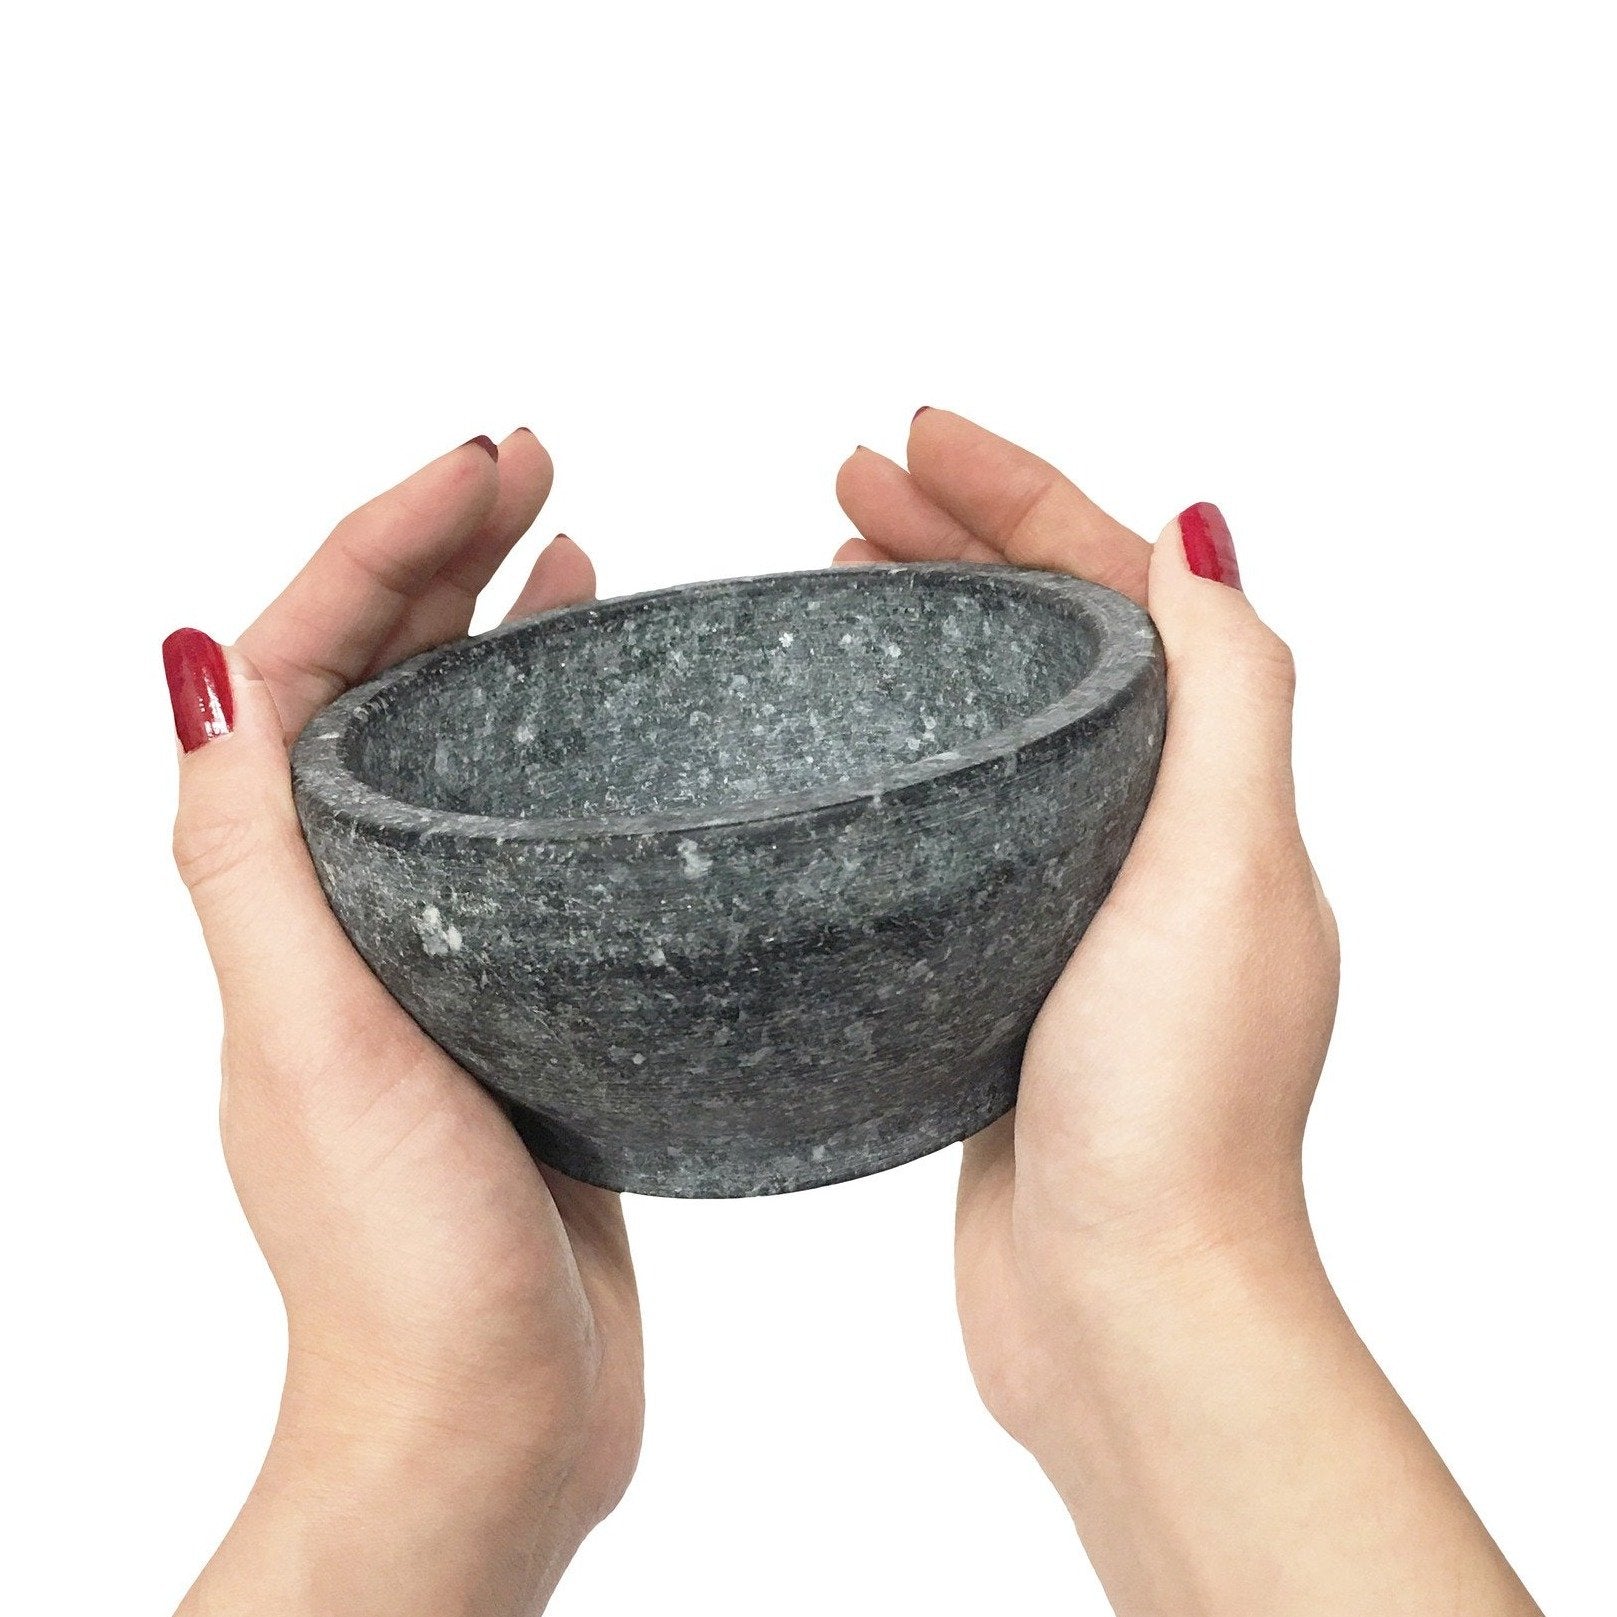 Korean Stone Bowl For Your Home! – Seoulville